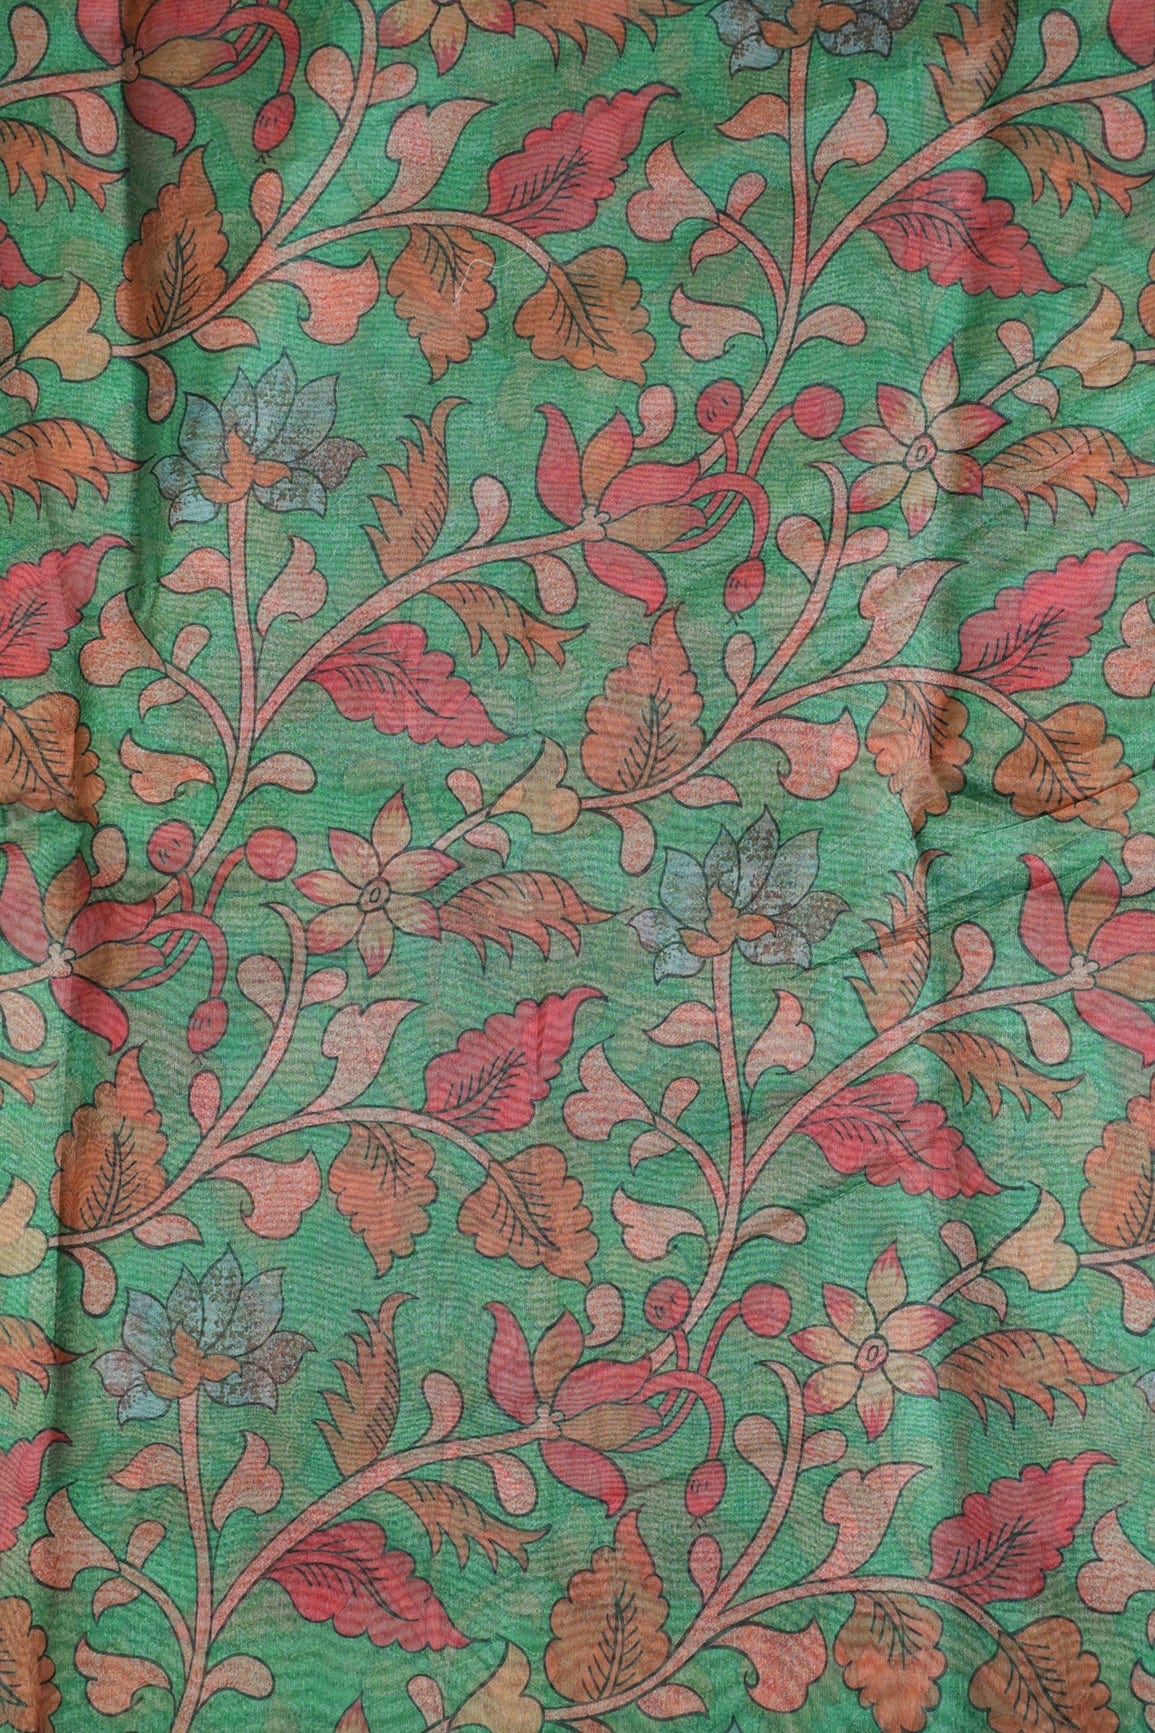 doeraa Prints Pink And Orange Floral Digital Print On Green Organza Fabric